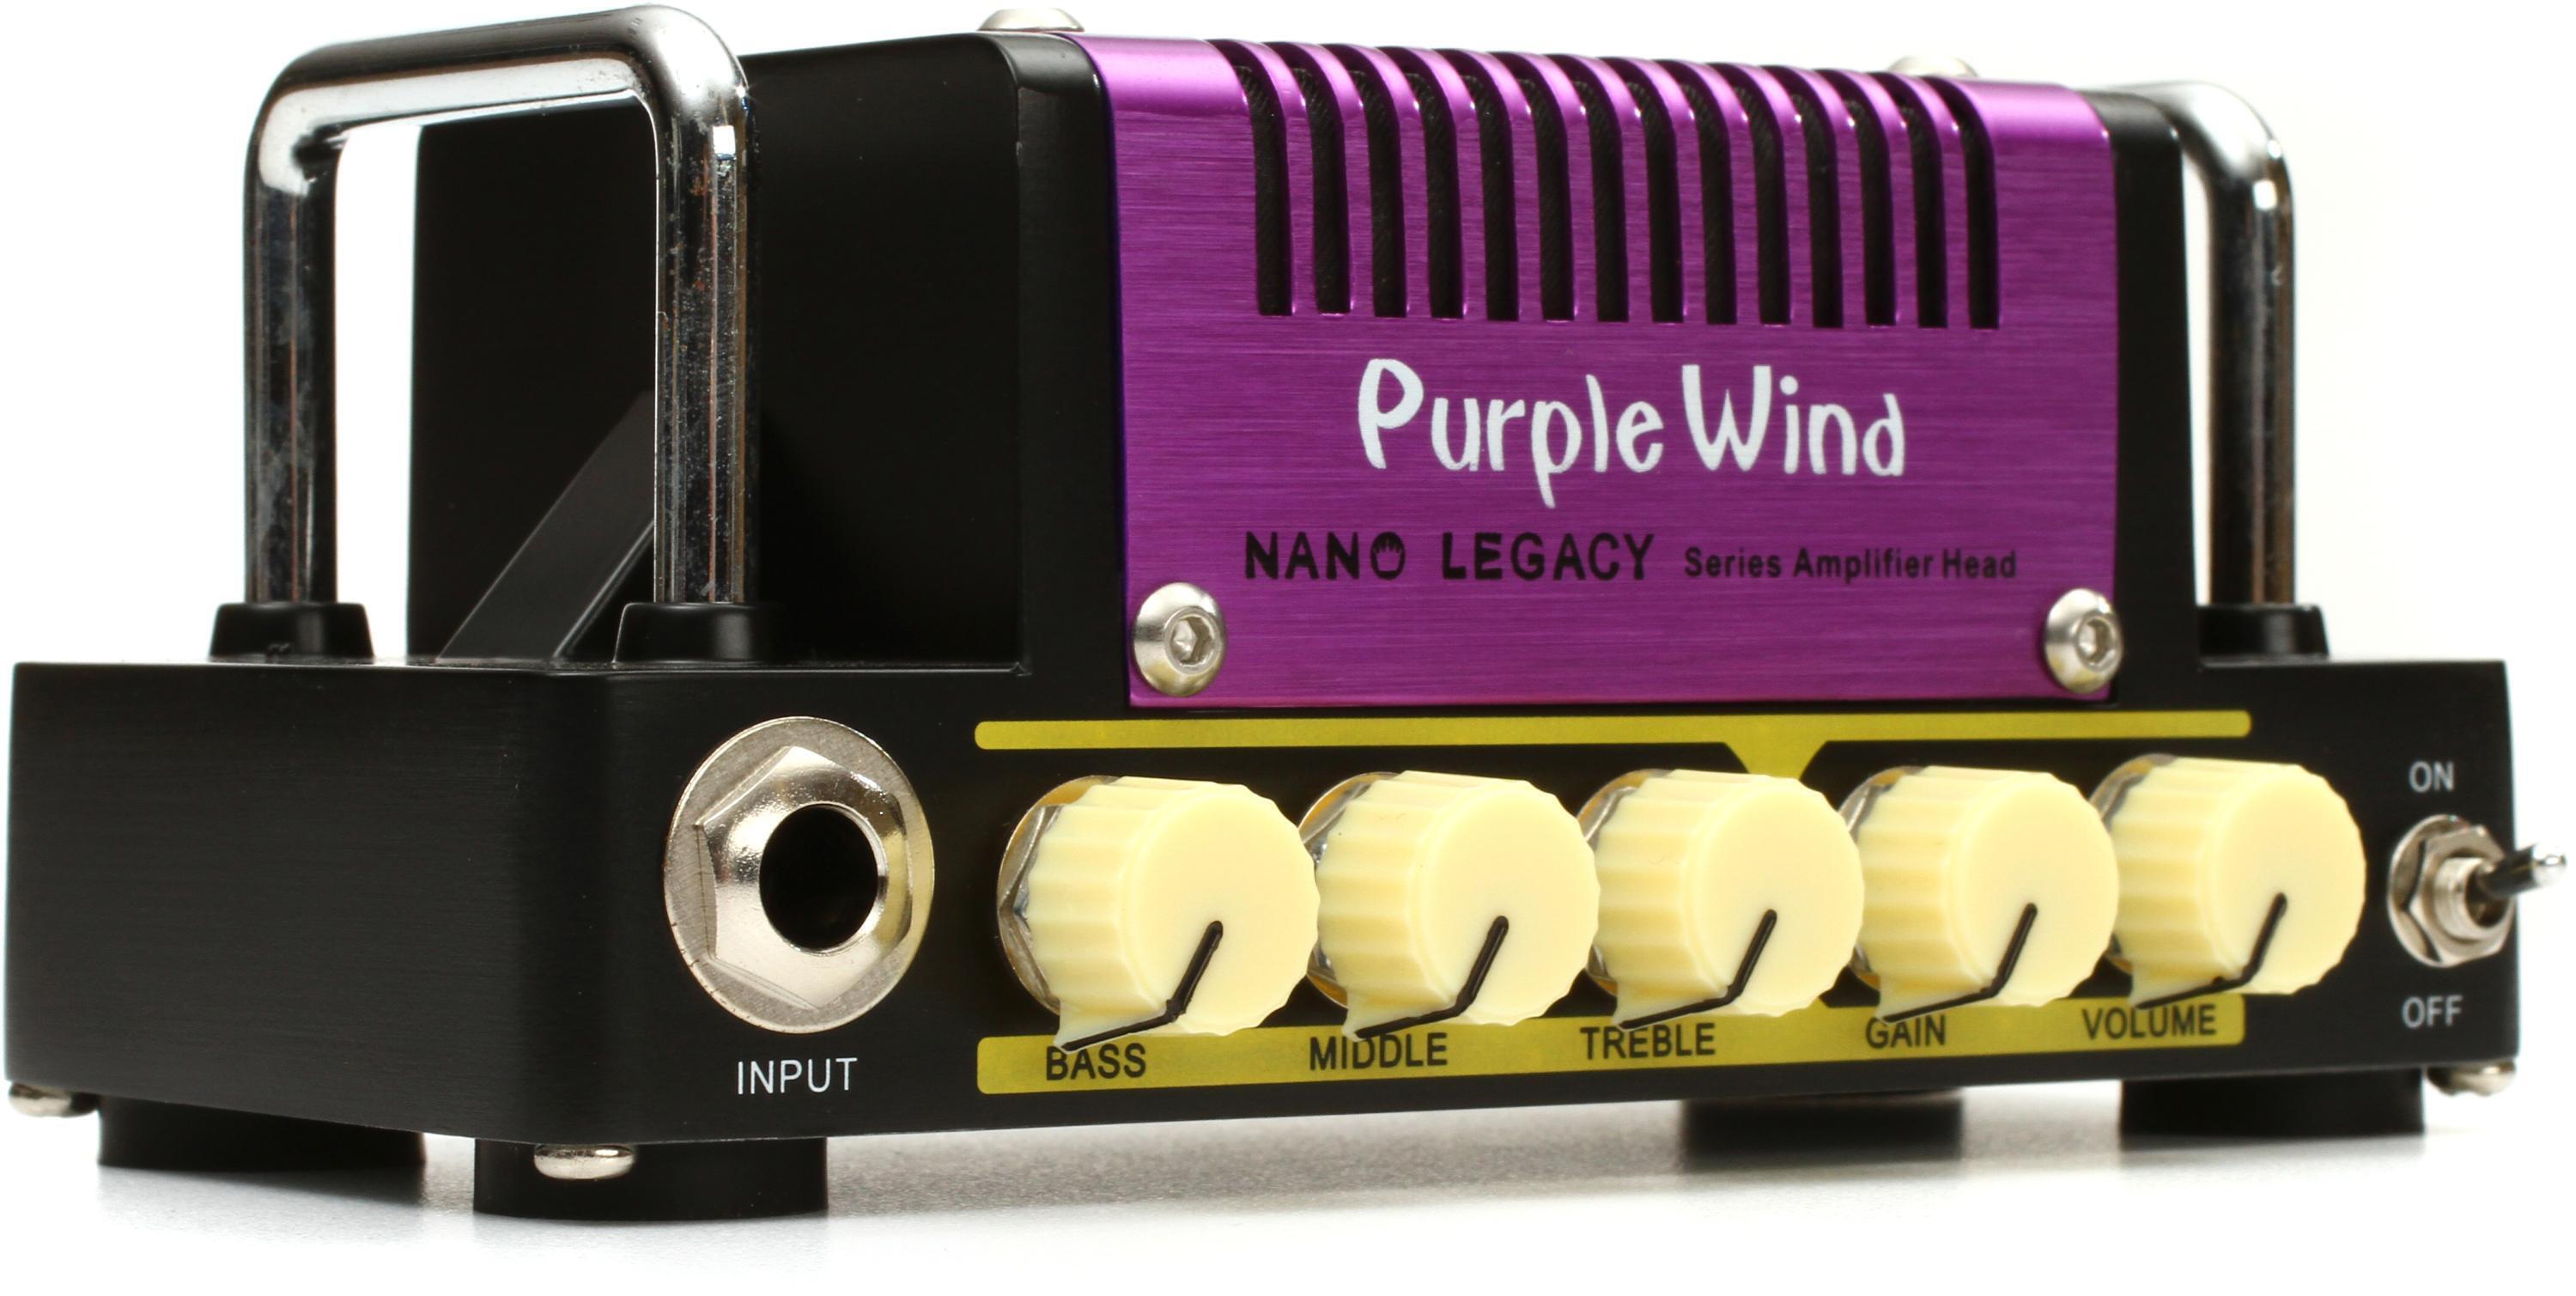 Hotone Nano Legacy Purple Wind Class AB Head | Sweetwater